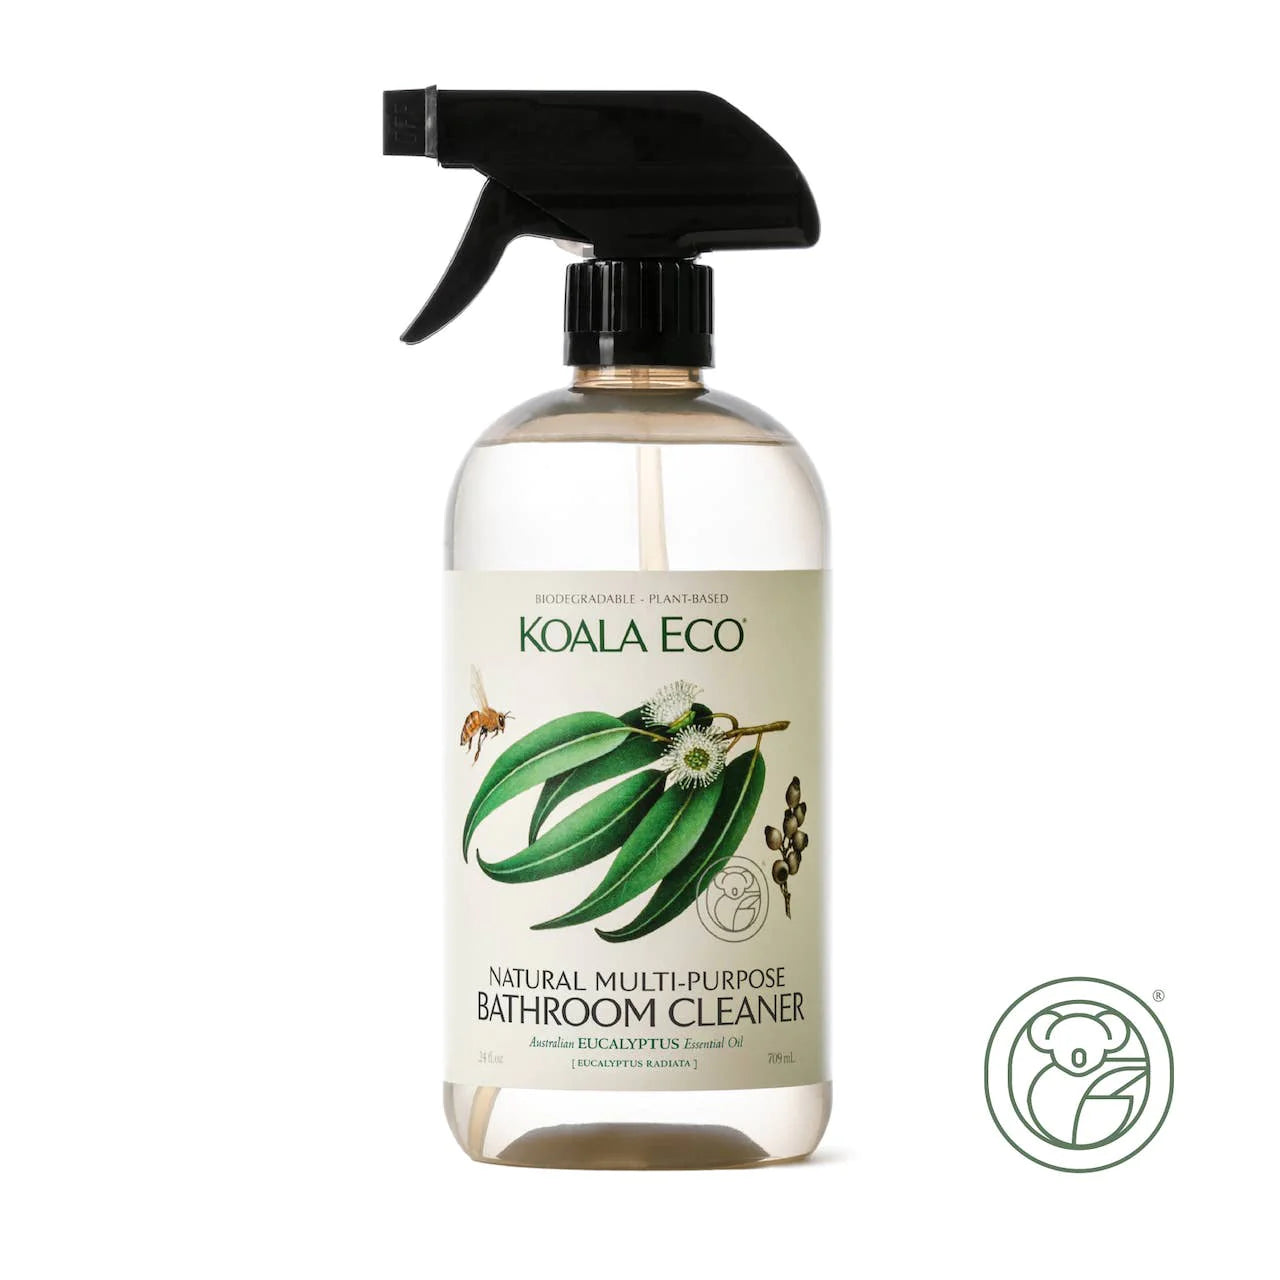 Koala Eco - Natural Multi-Purpose Bathroom Cleaner, 24 oz